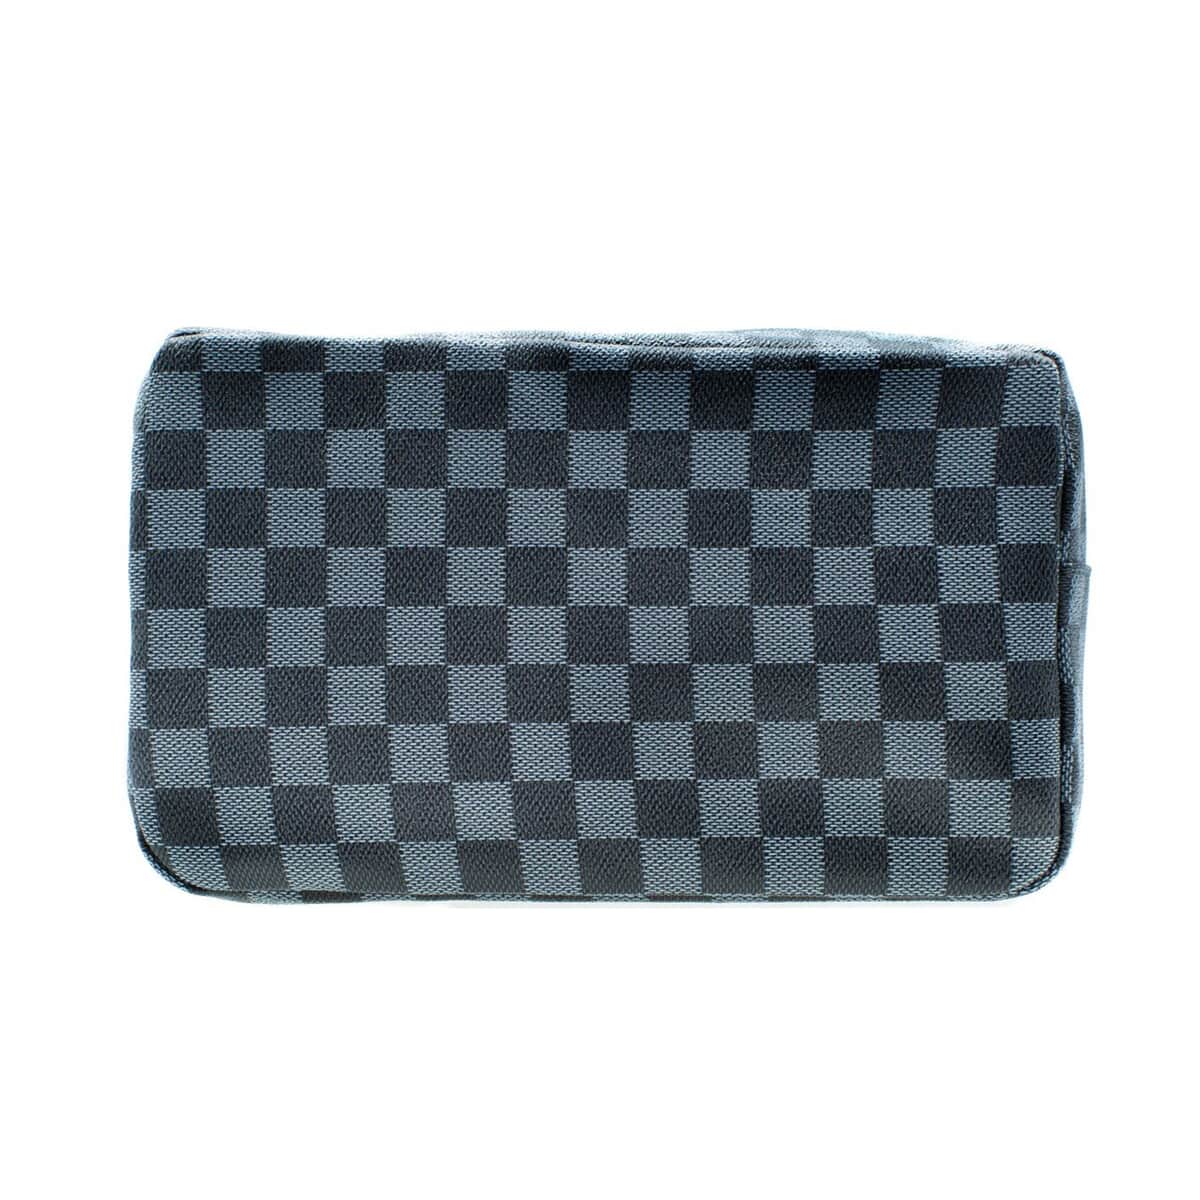 Unisex Black and Gray Vegan Leather Checkered Dopp Kit image number 0